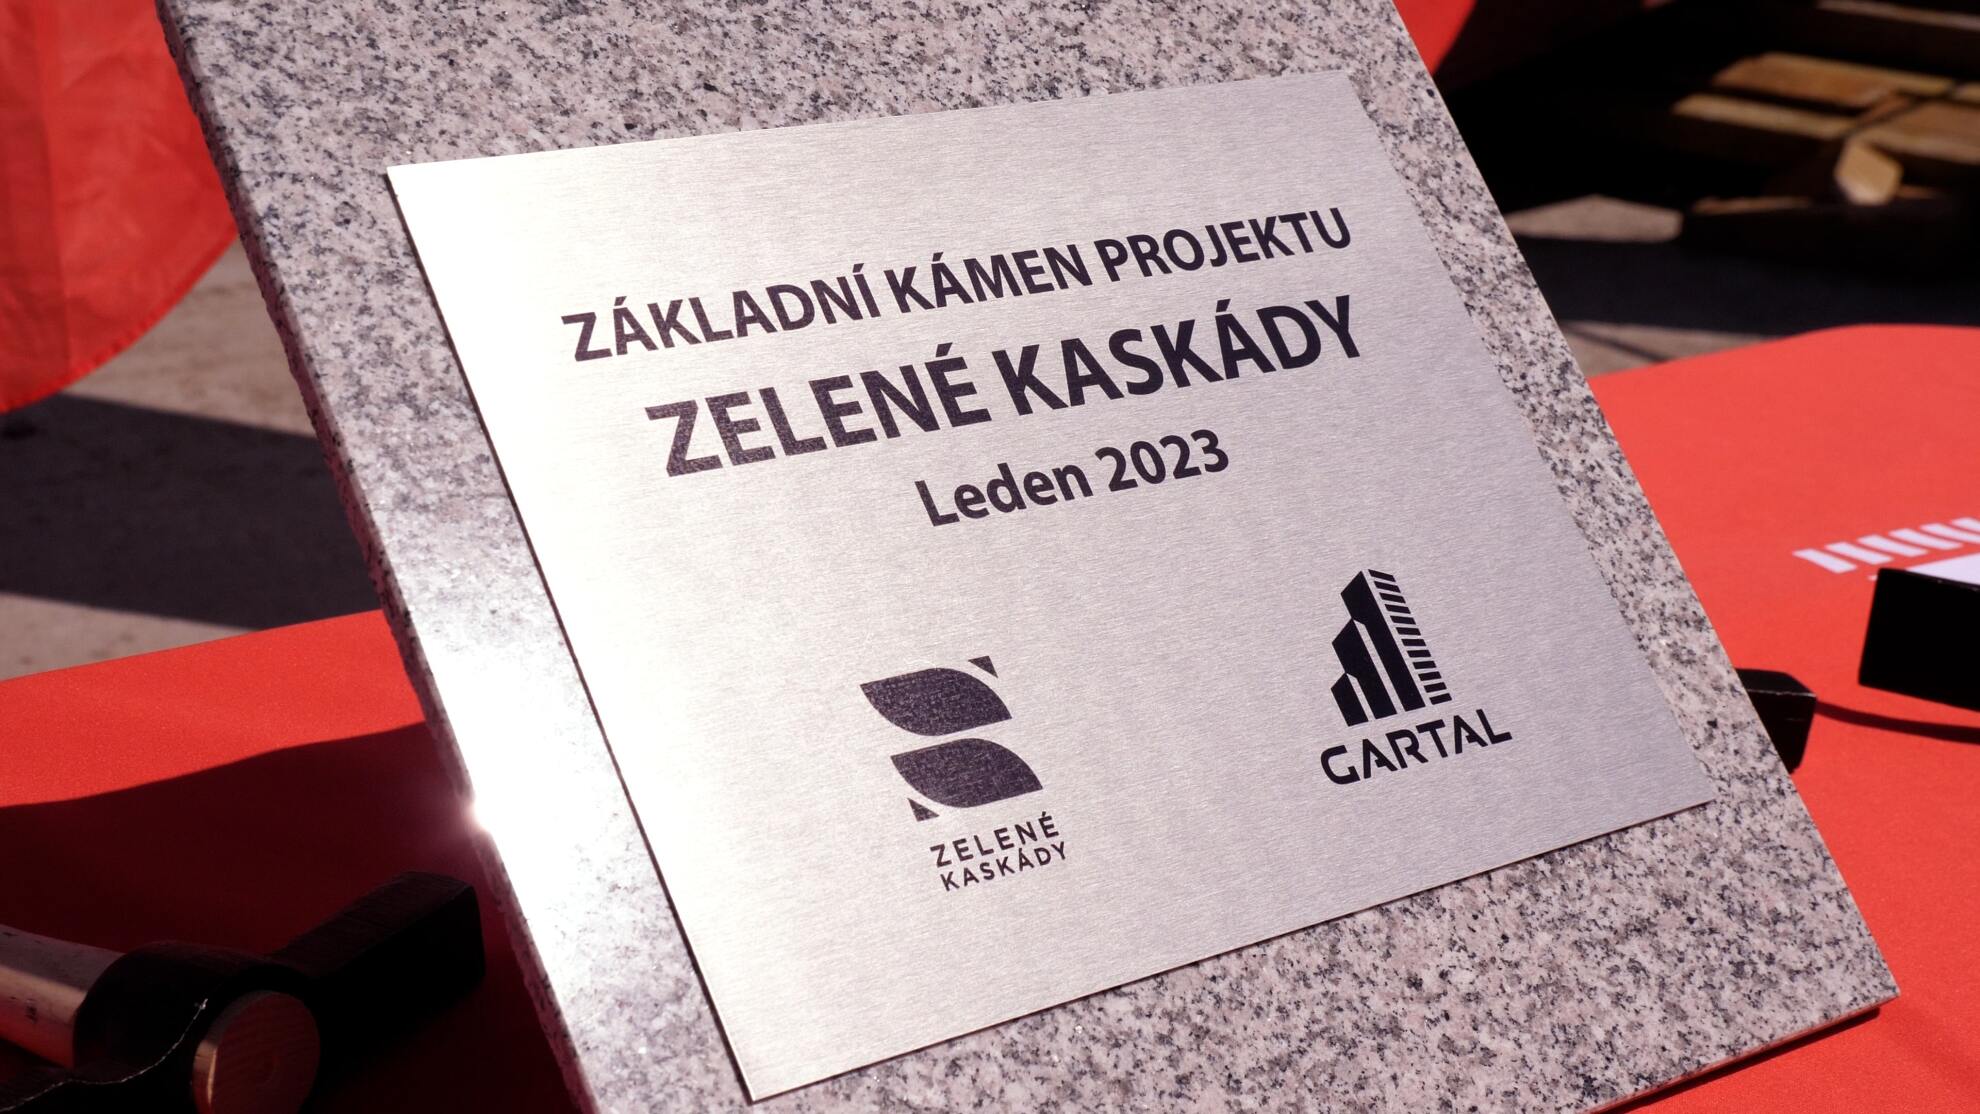 Laying the foundation stone of the Zelené kaskády project